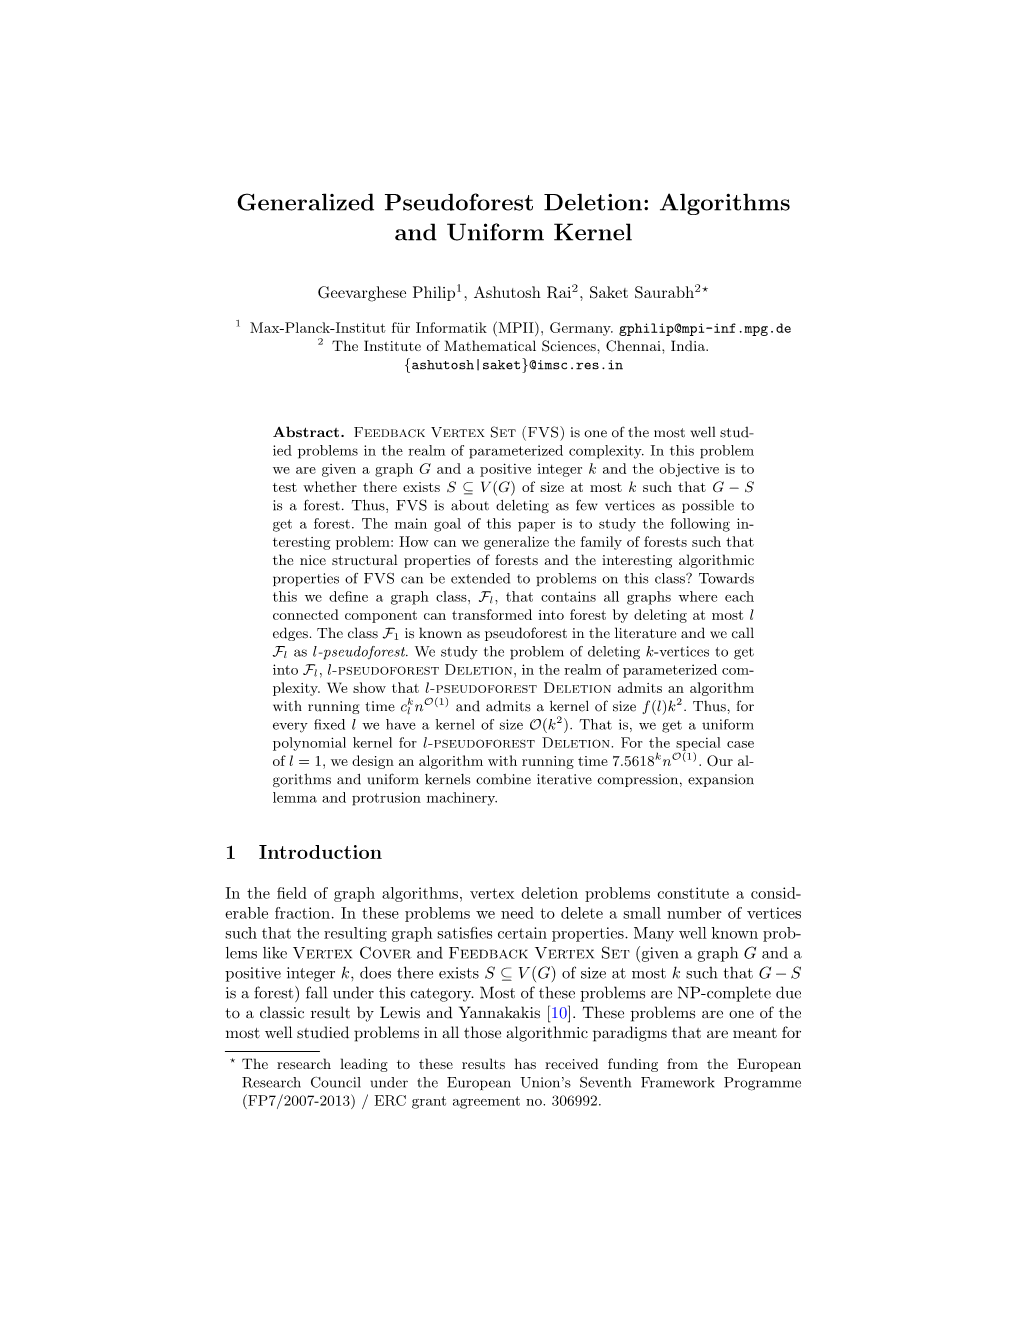 Generalized Pseudoforest Deletion: Algorithms and Uniform Kernel